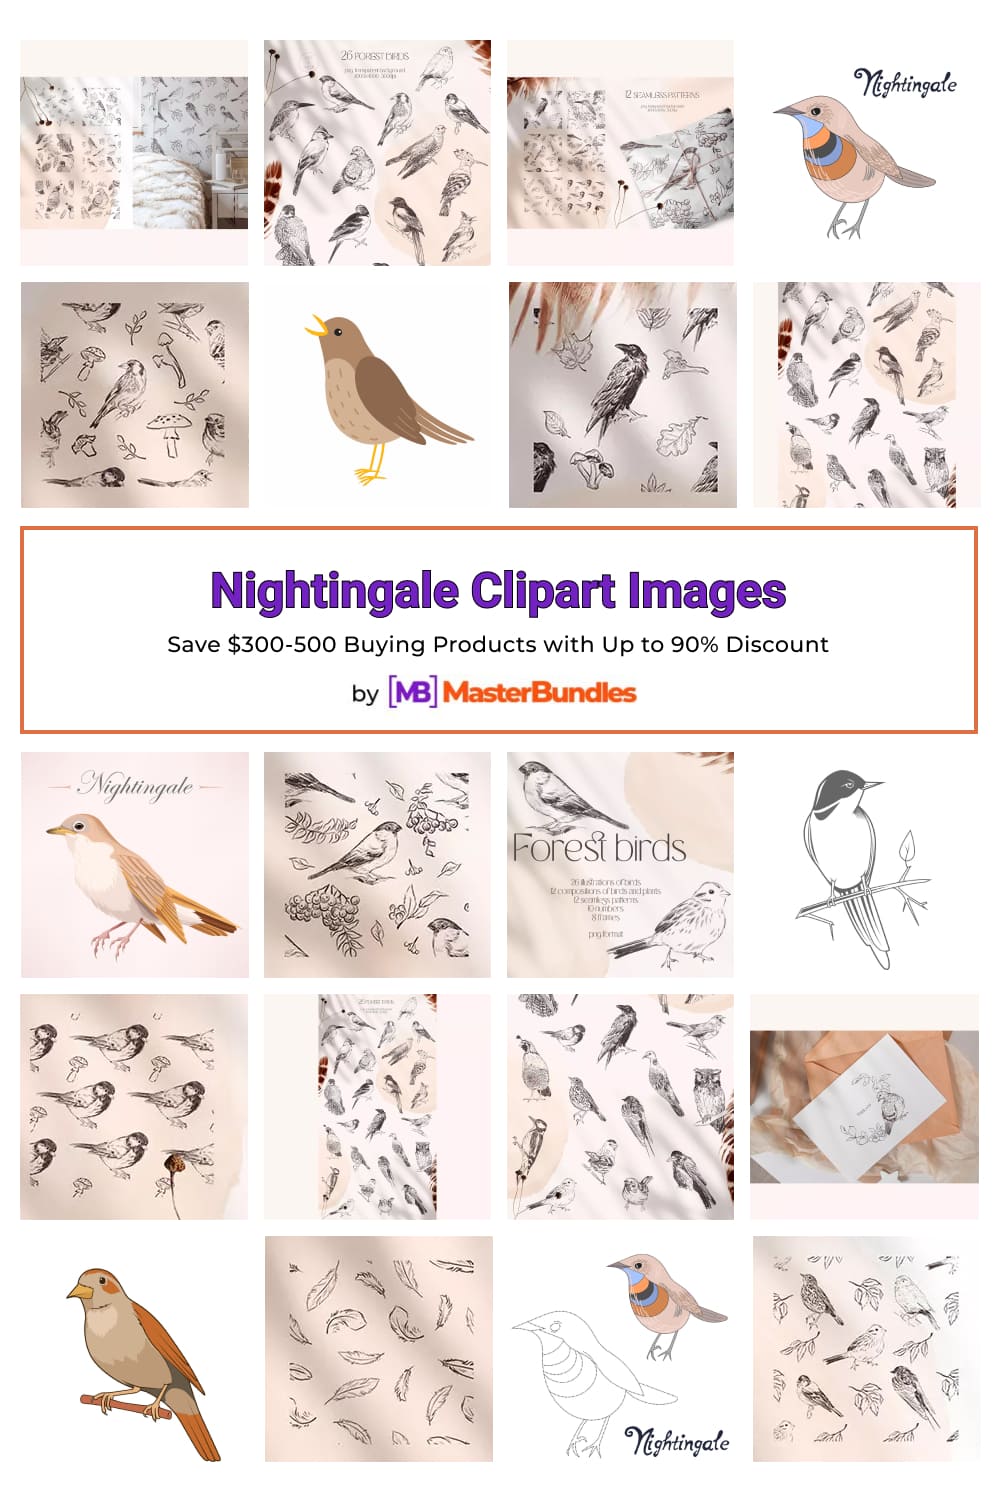 Nightingale Clipart Images Pinterest.